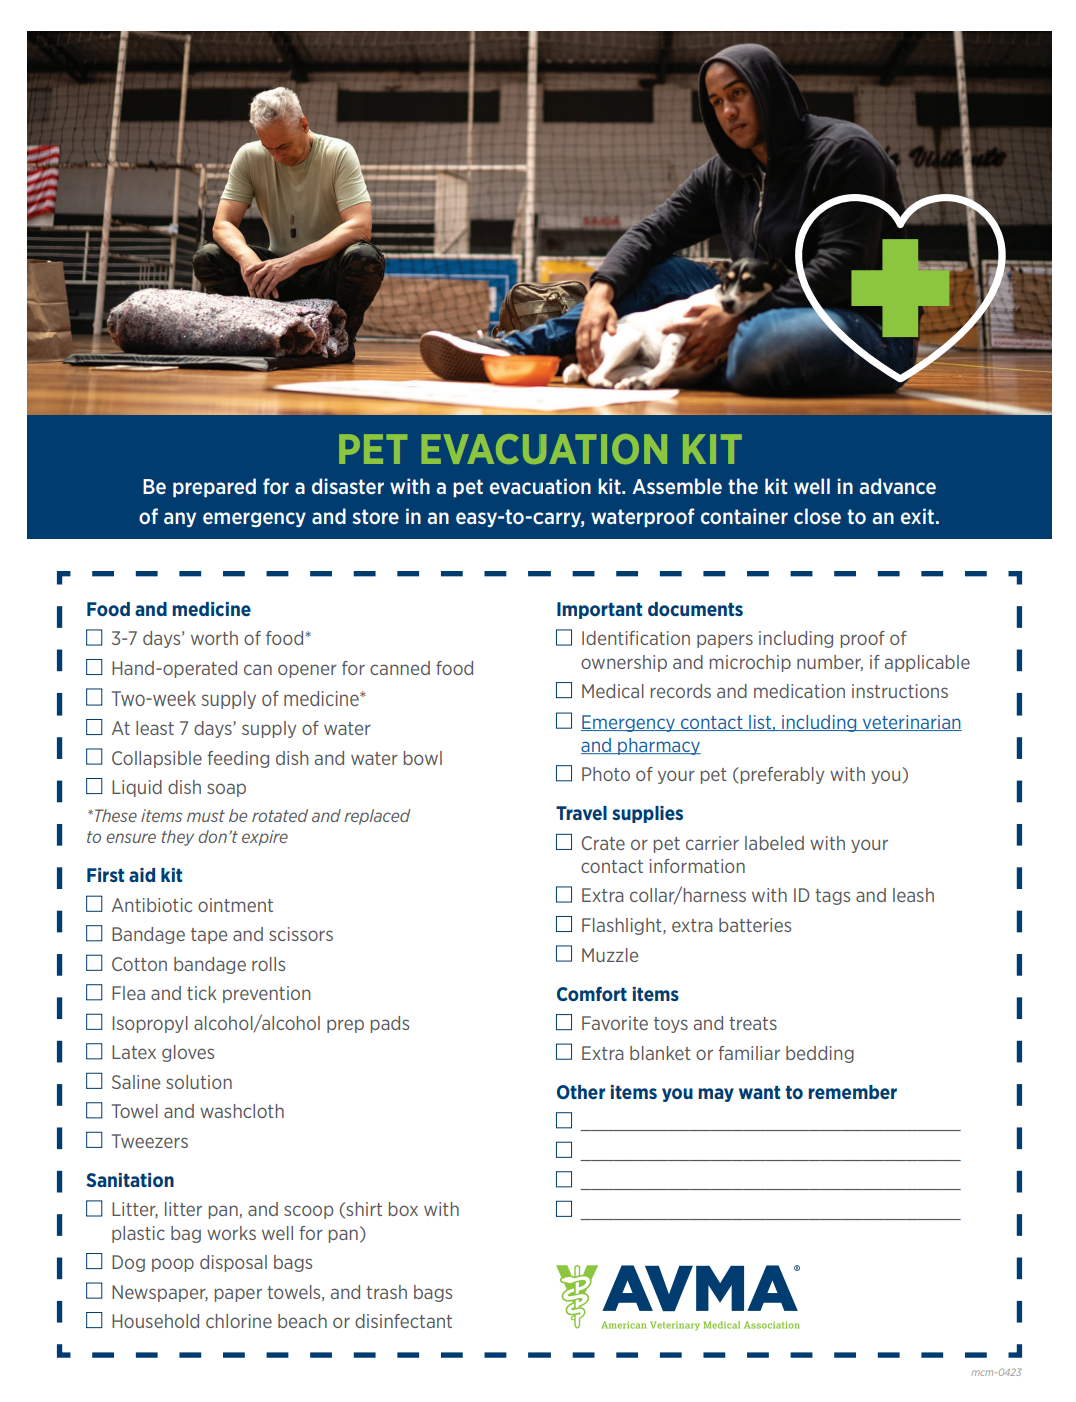 Pet evacuation kit checklist